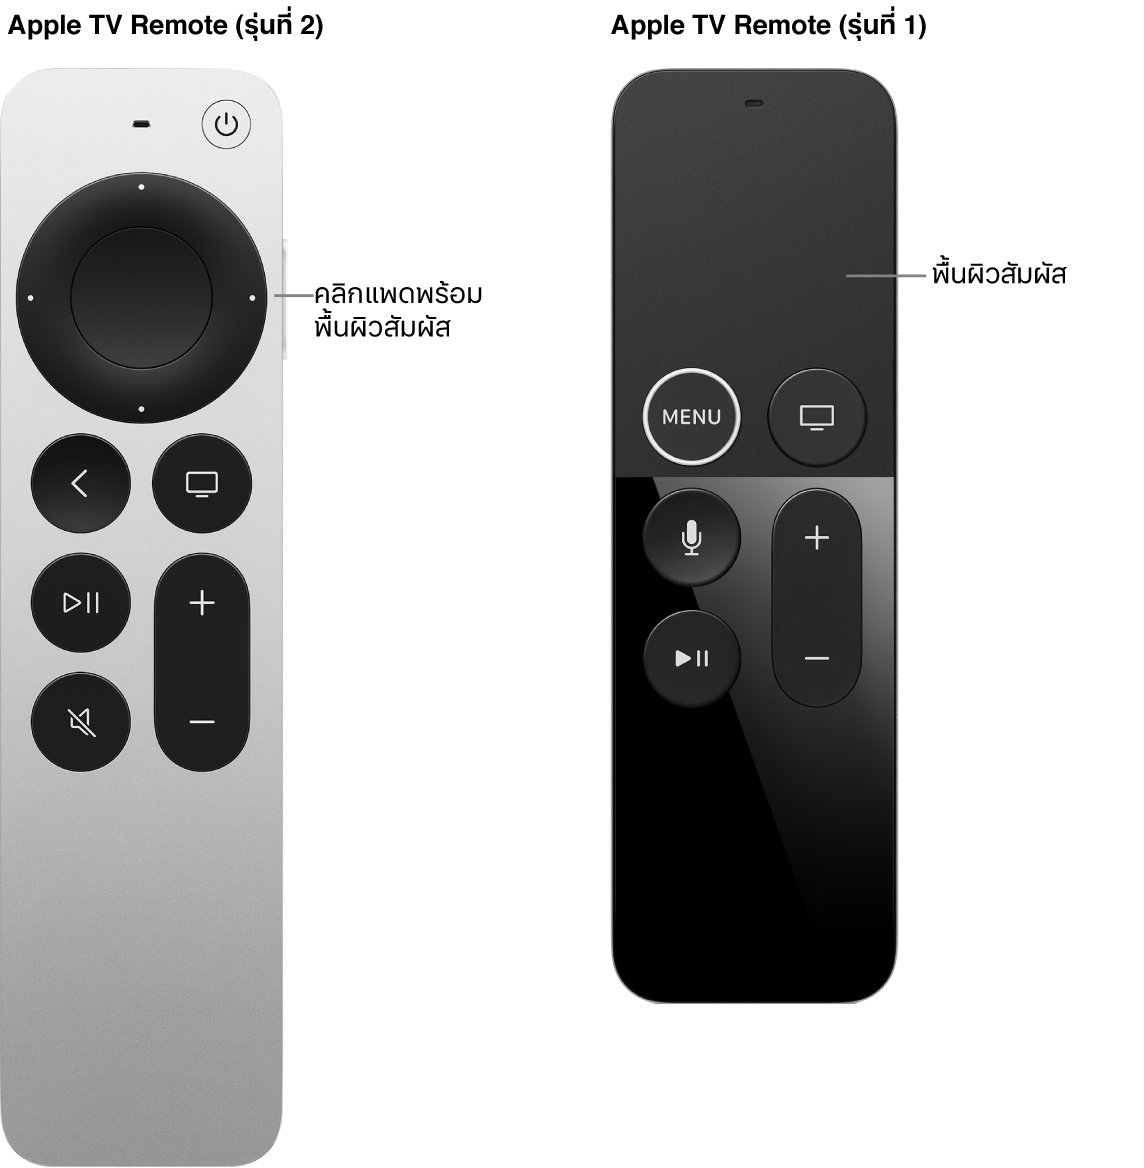 Apple TV Remote (รุ่นที่ 2) ที่มีคลิกแพด และ Apple TV Remote (รุ่นที่ 1) ที่มีพื้นผิวสัมผัส